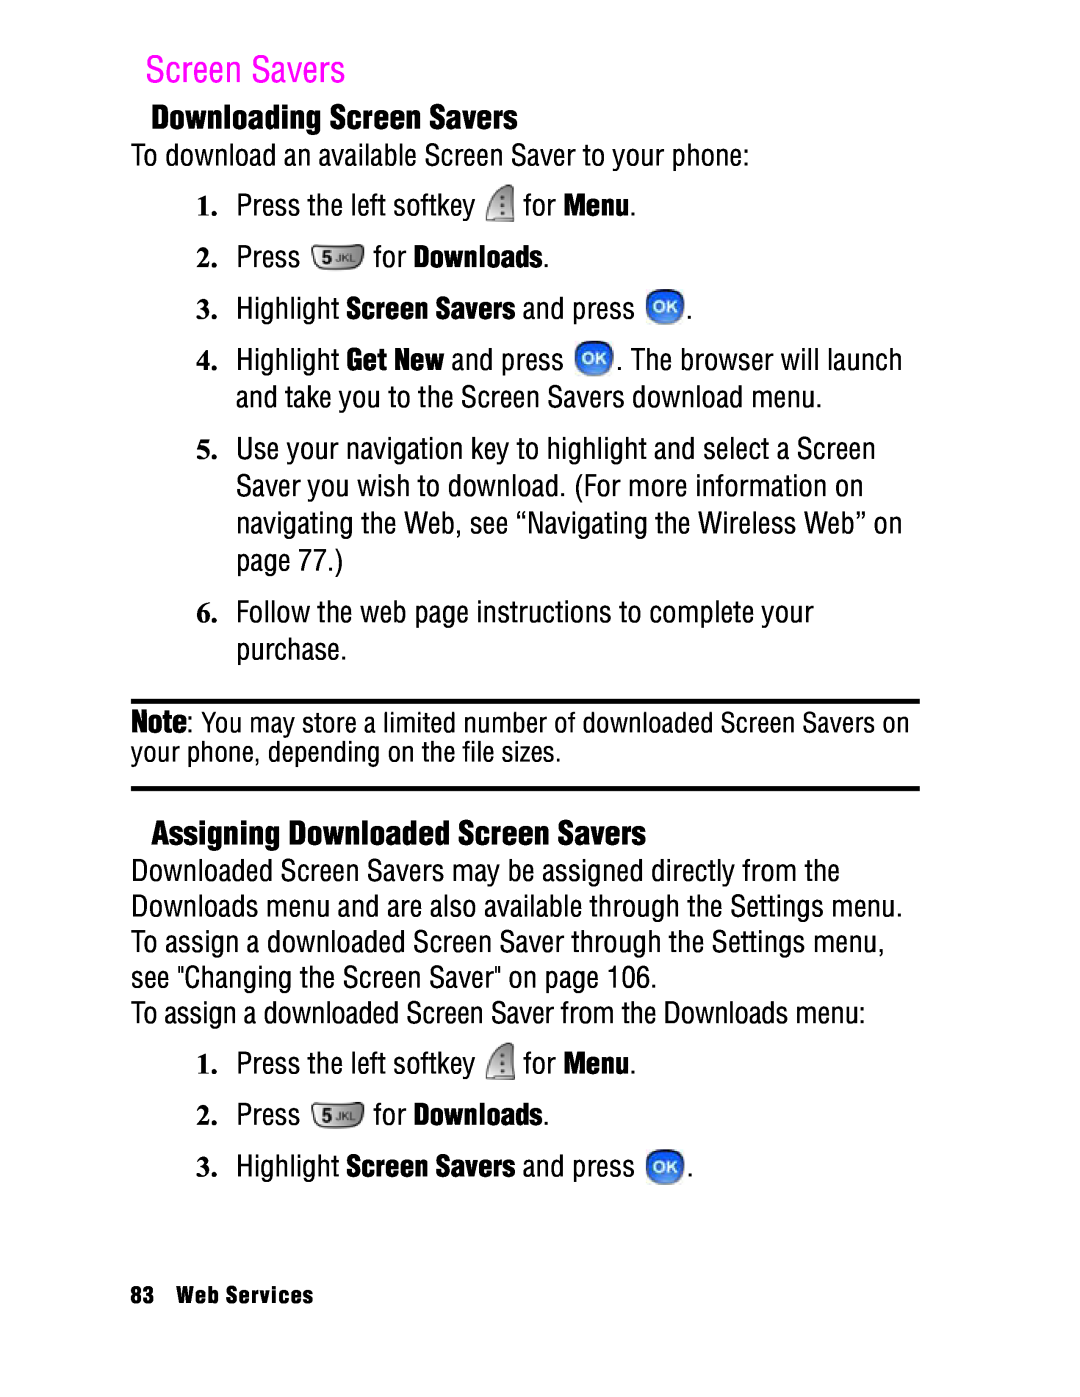 Samsung SPH-a740 manual Downloading Screen Savers, Assigning Downloaded Screen Savers 